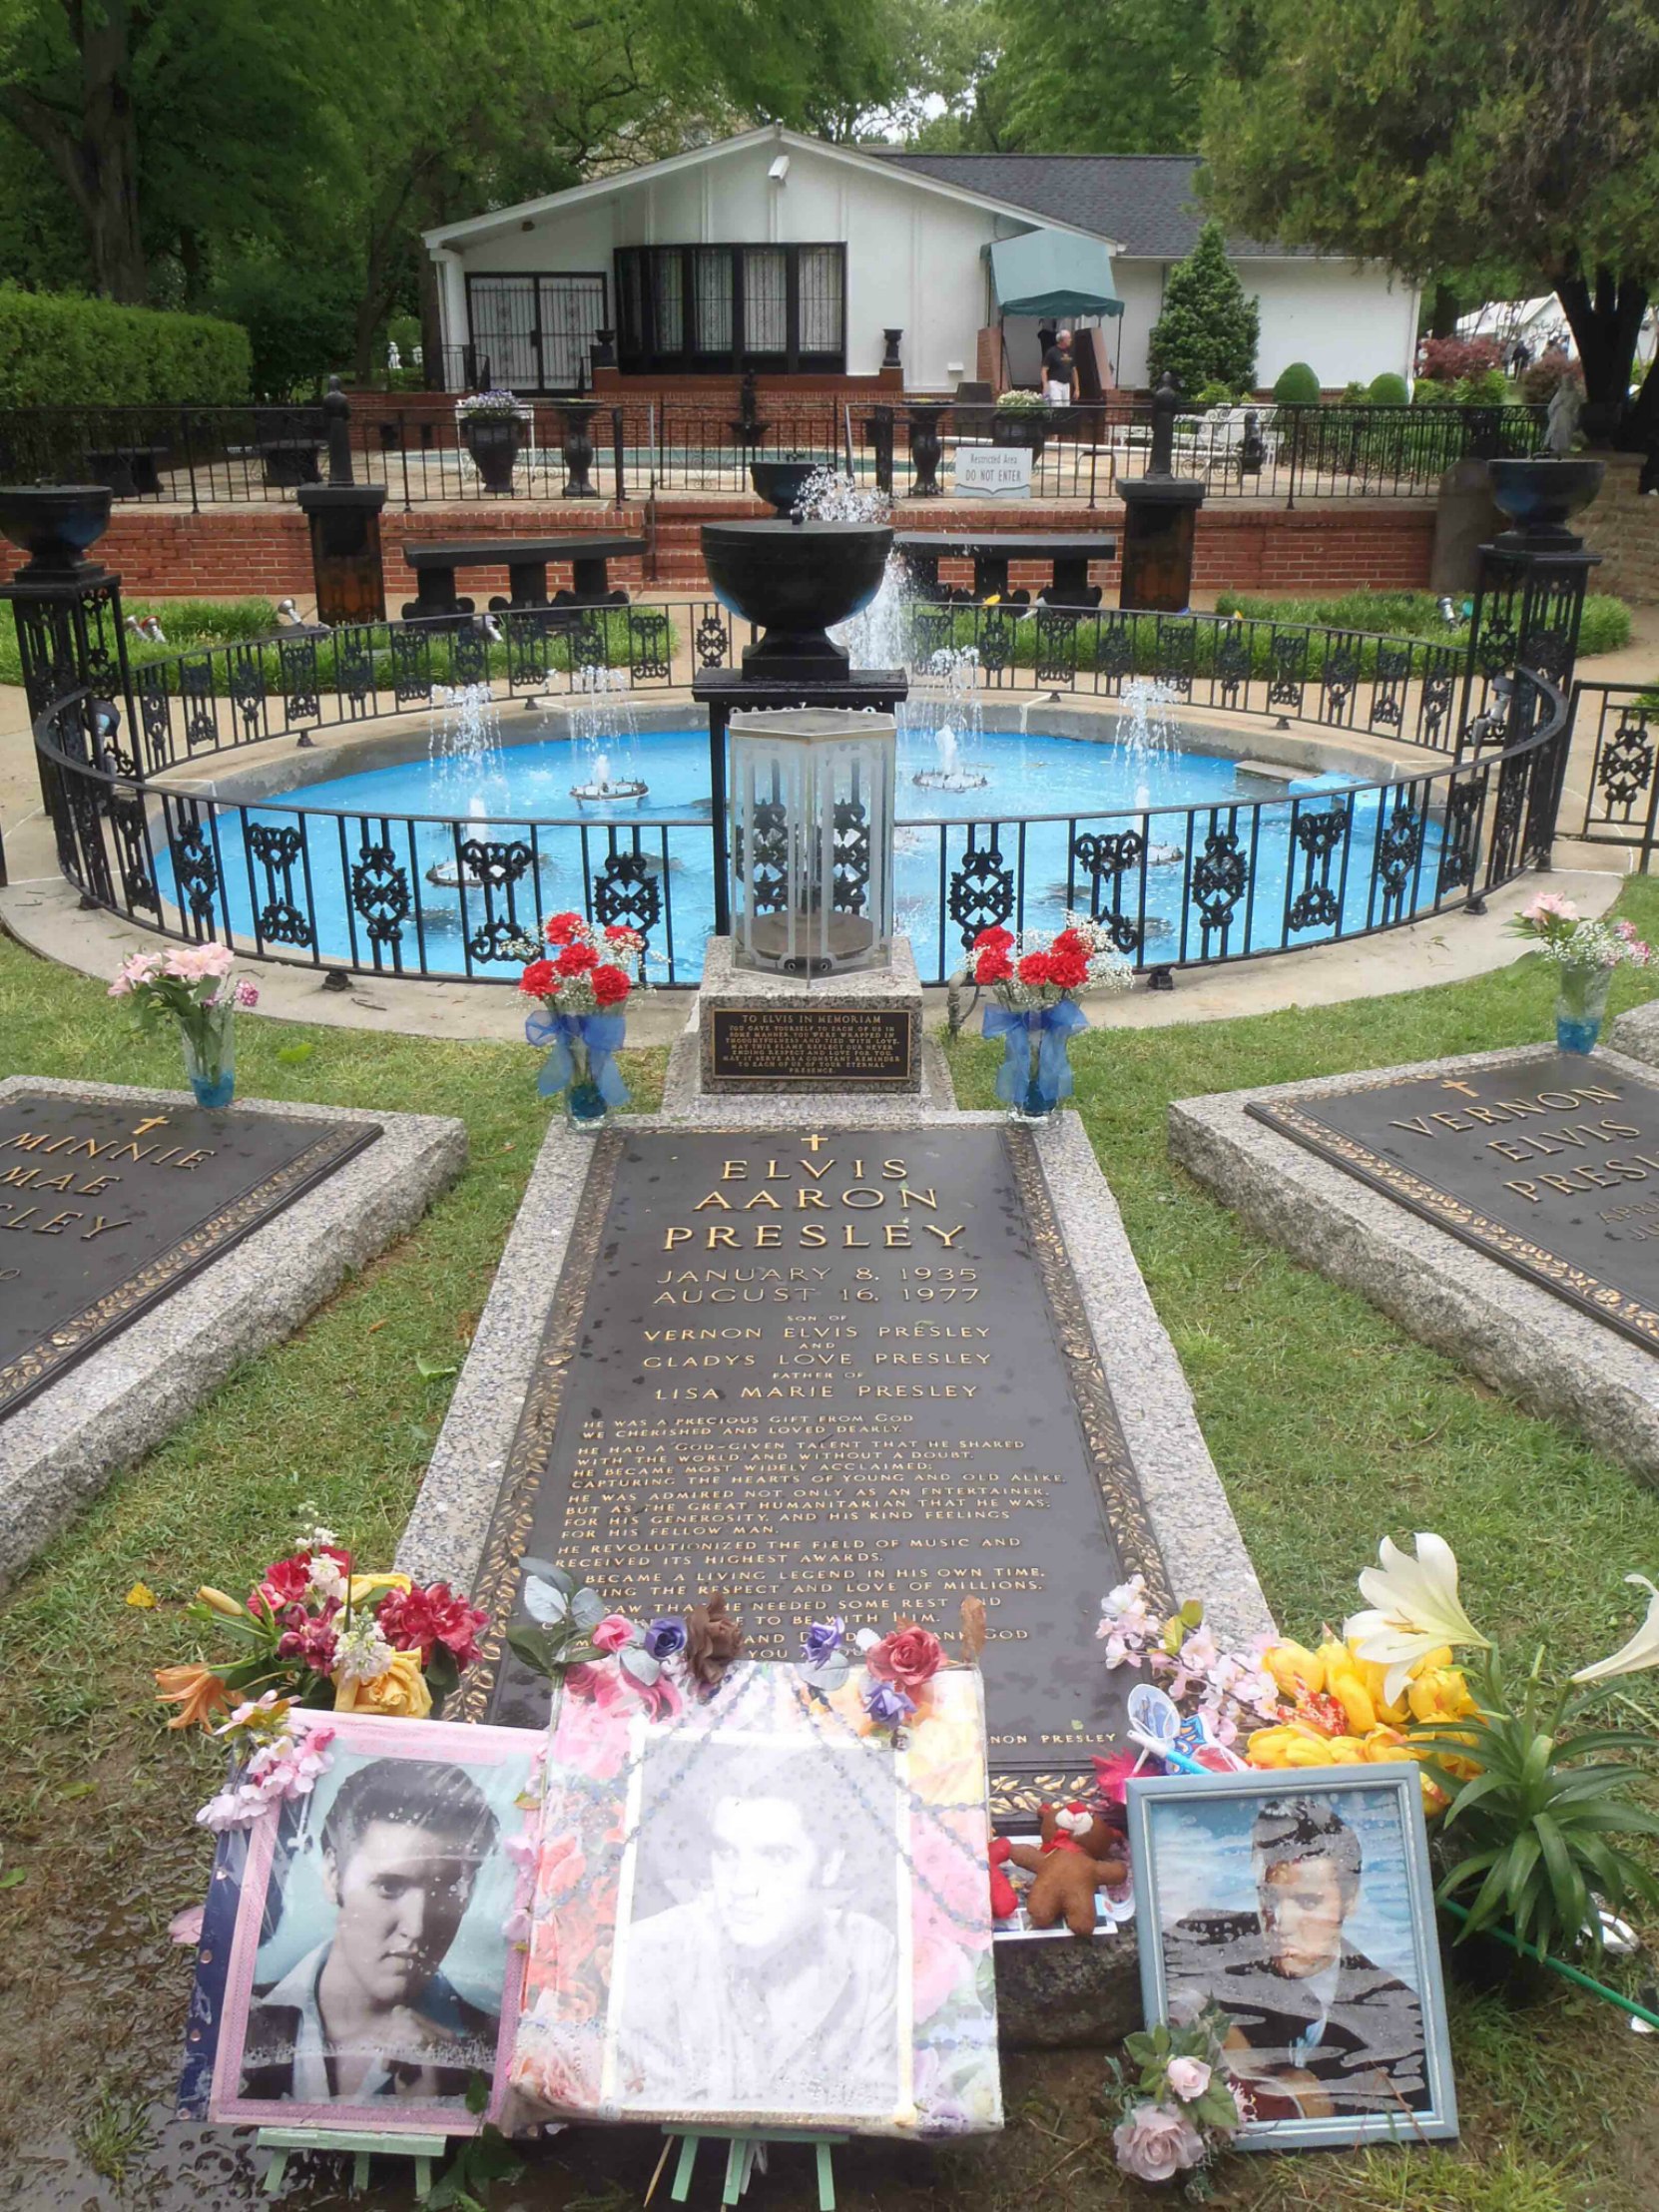 Elvis Presley's grave at Graceland, Memphis, Tennessee